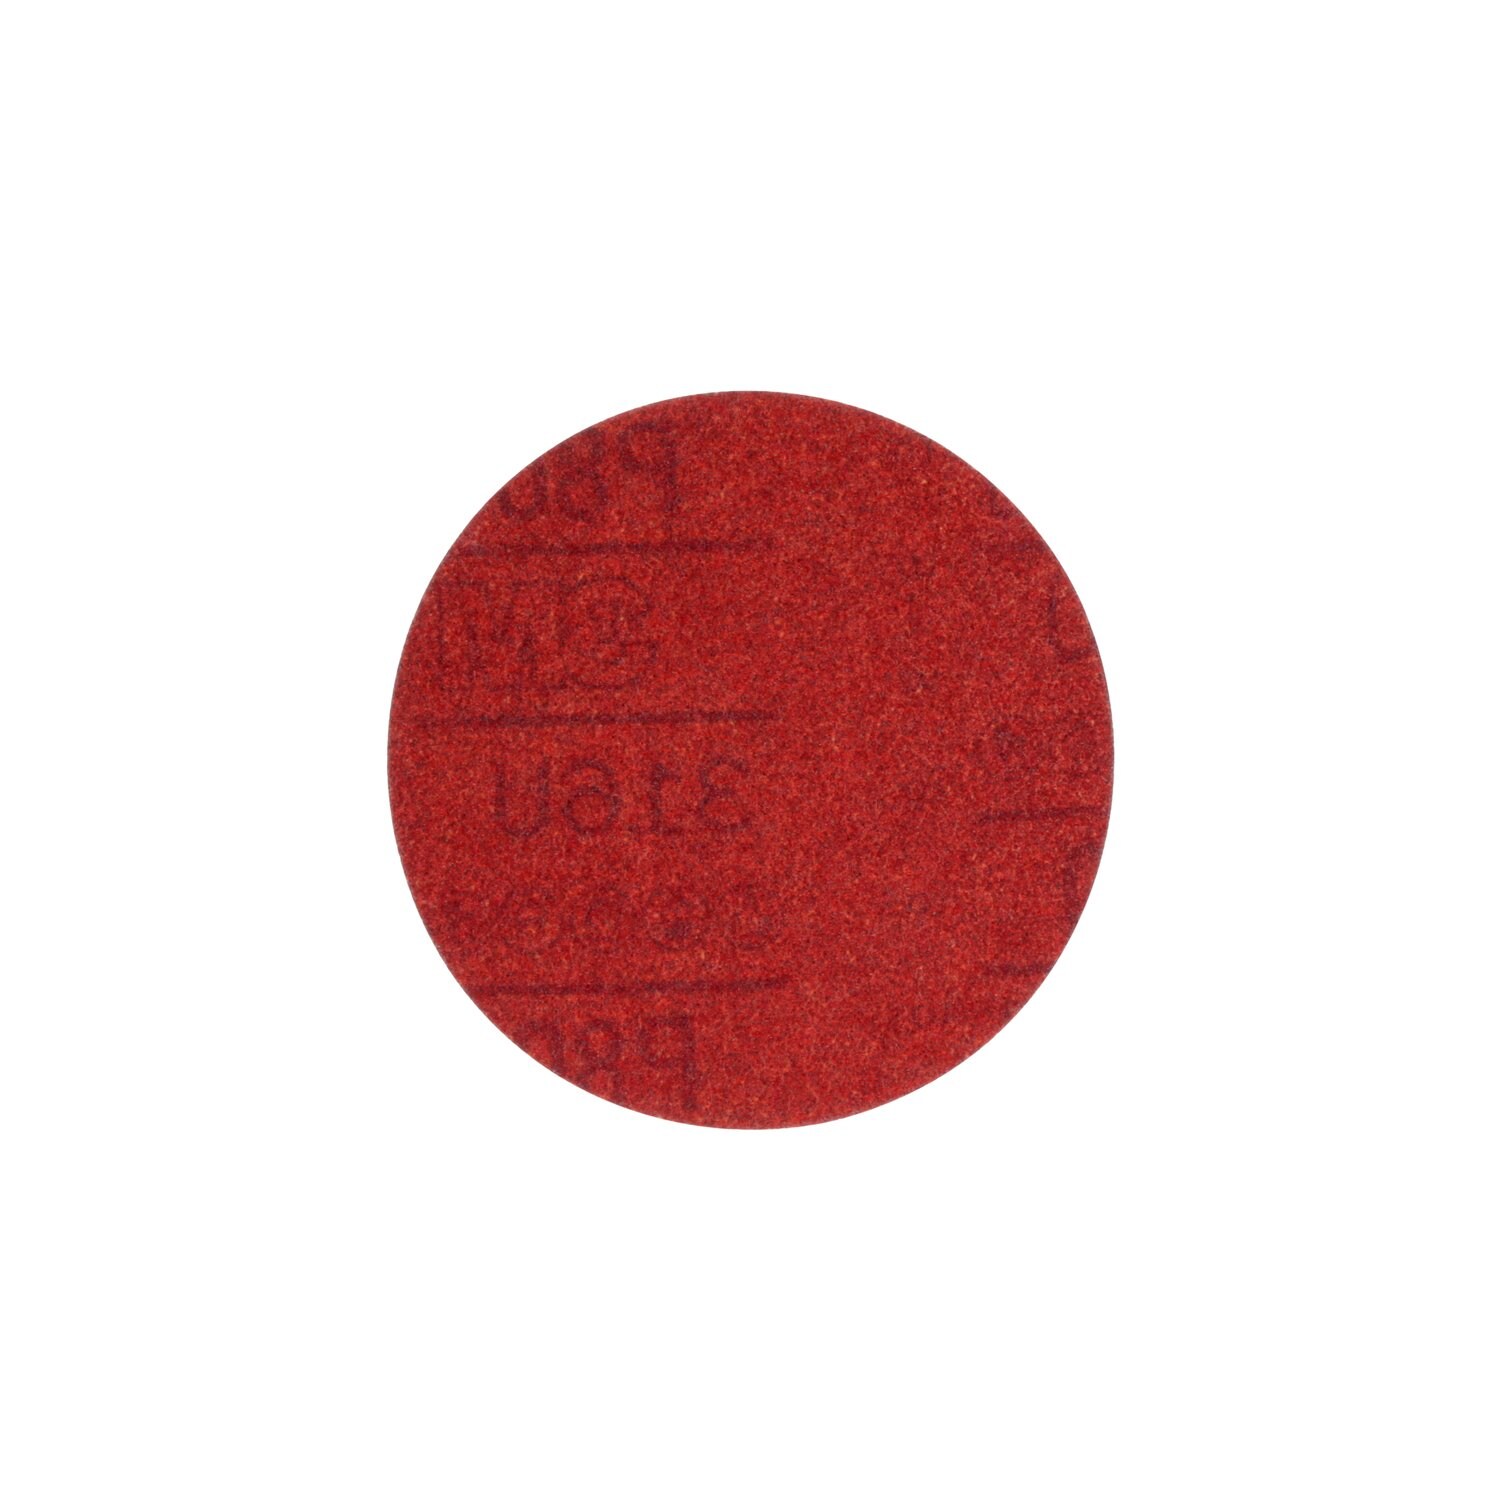 7000119850 - 3M Hookit Red Abrasive Disc, 01302, 5 in, P80, 50 discs per carton, 6
cartons per case